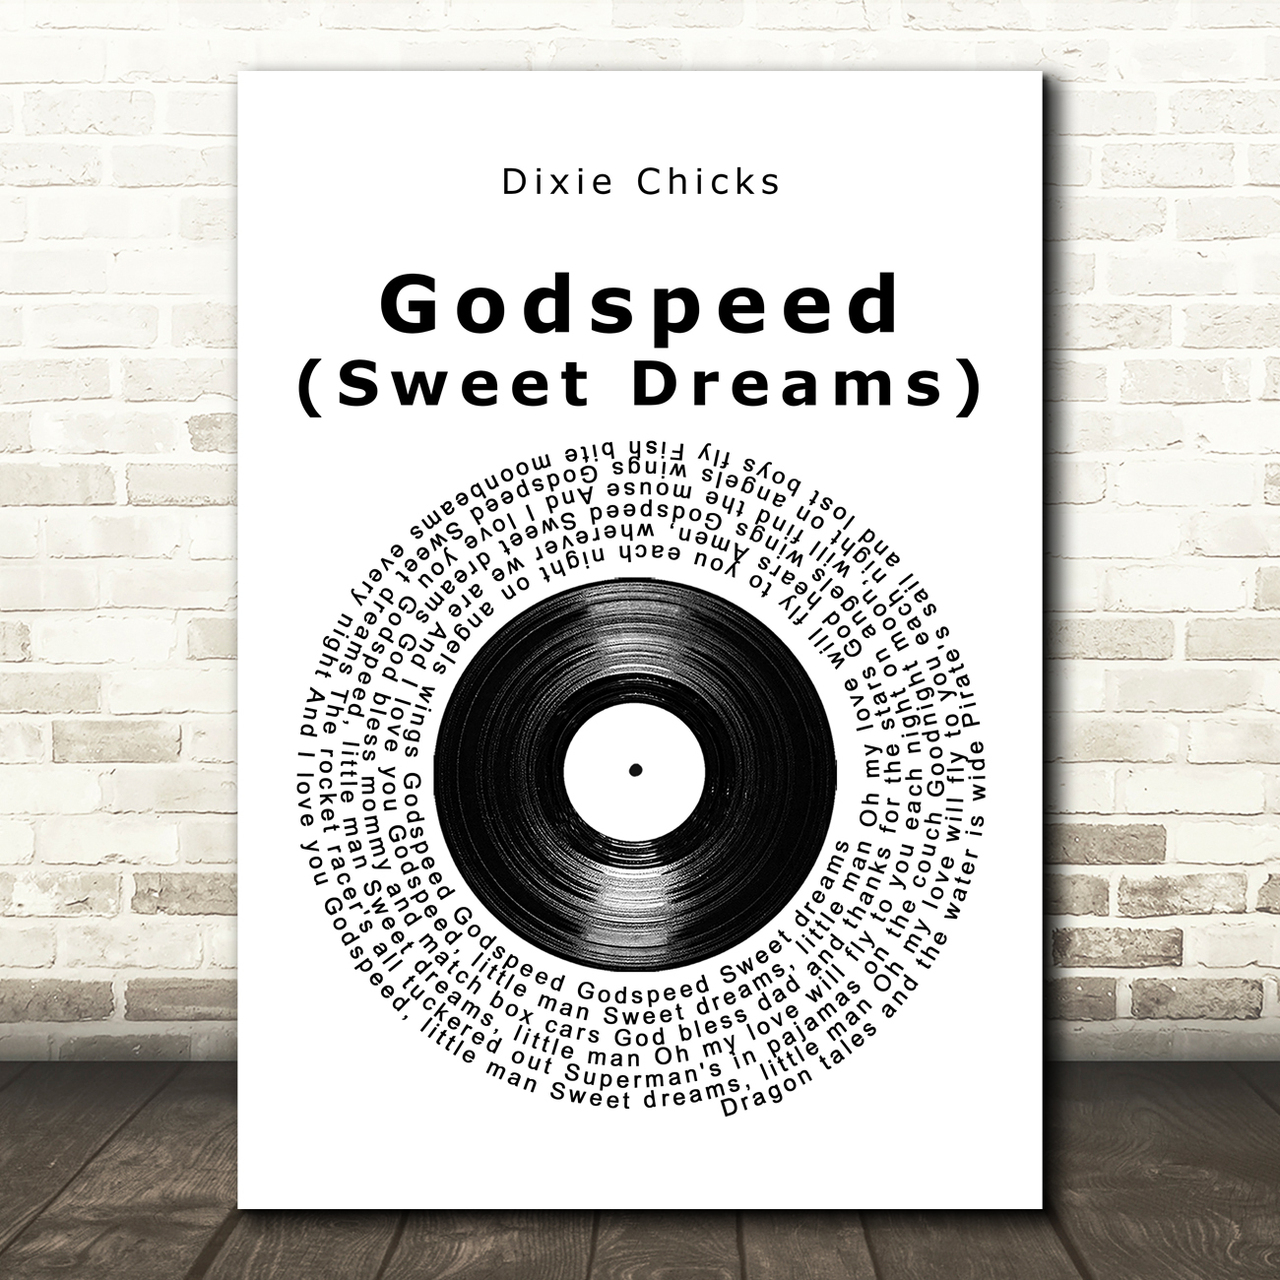 Dixie Chicks Godspeed (Sweet Dreams) Vinyl Record Song Lyric Art Print